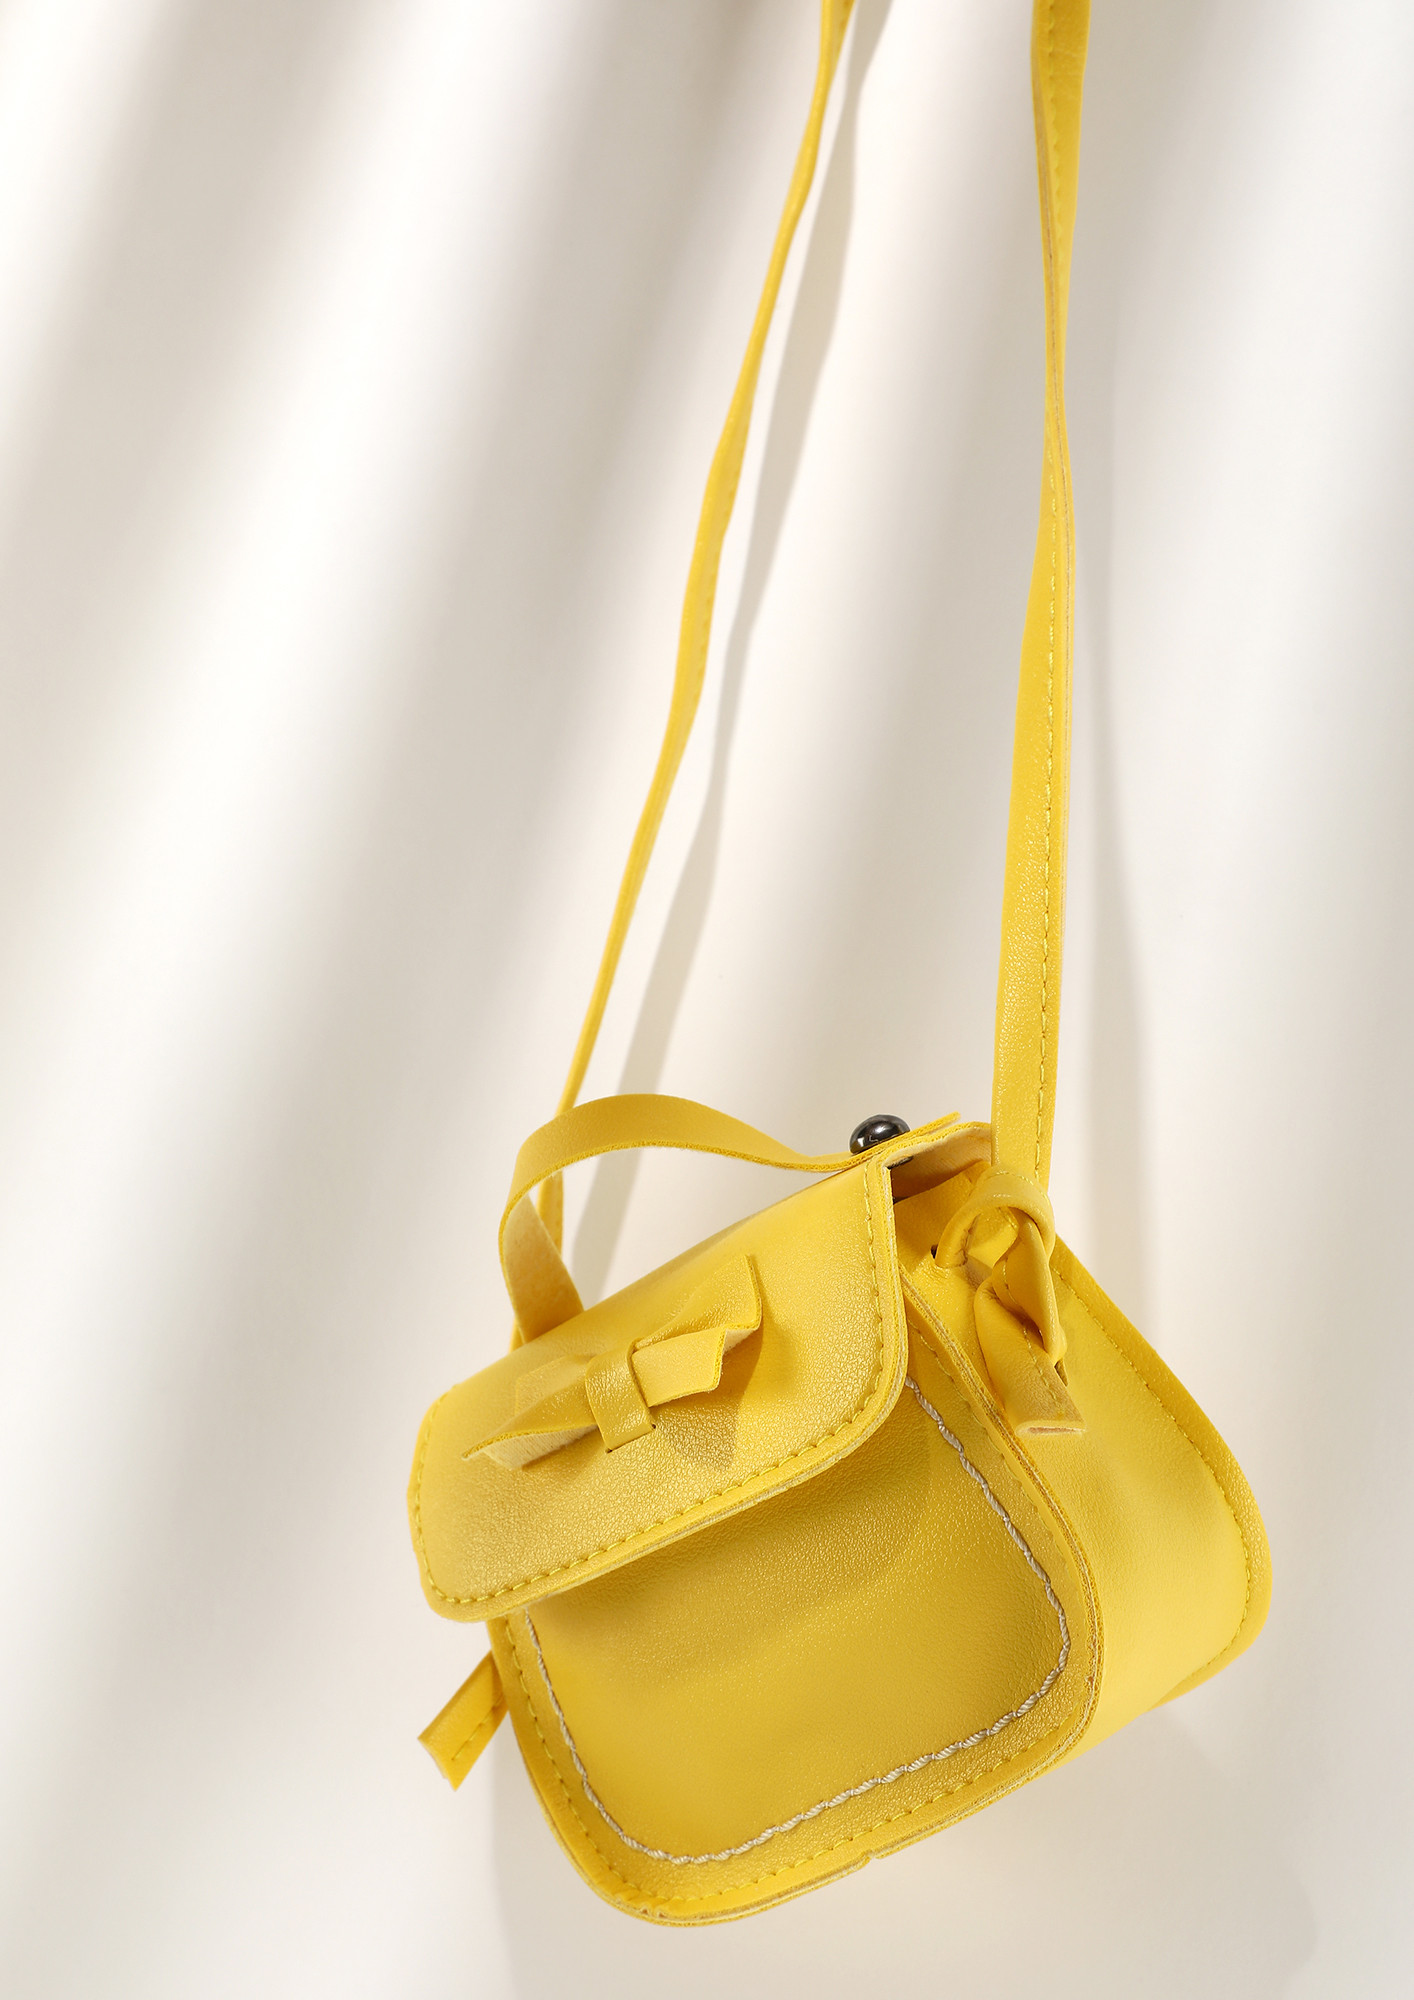 Buy Perler Bead Bag, Yellow Yellow-White Black at Ubuy India